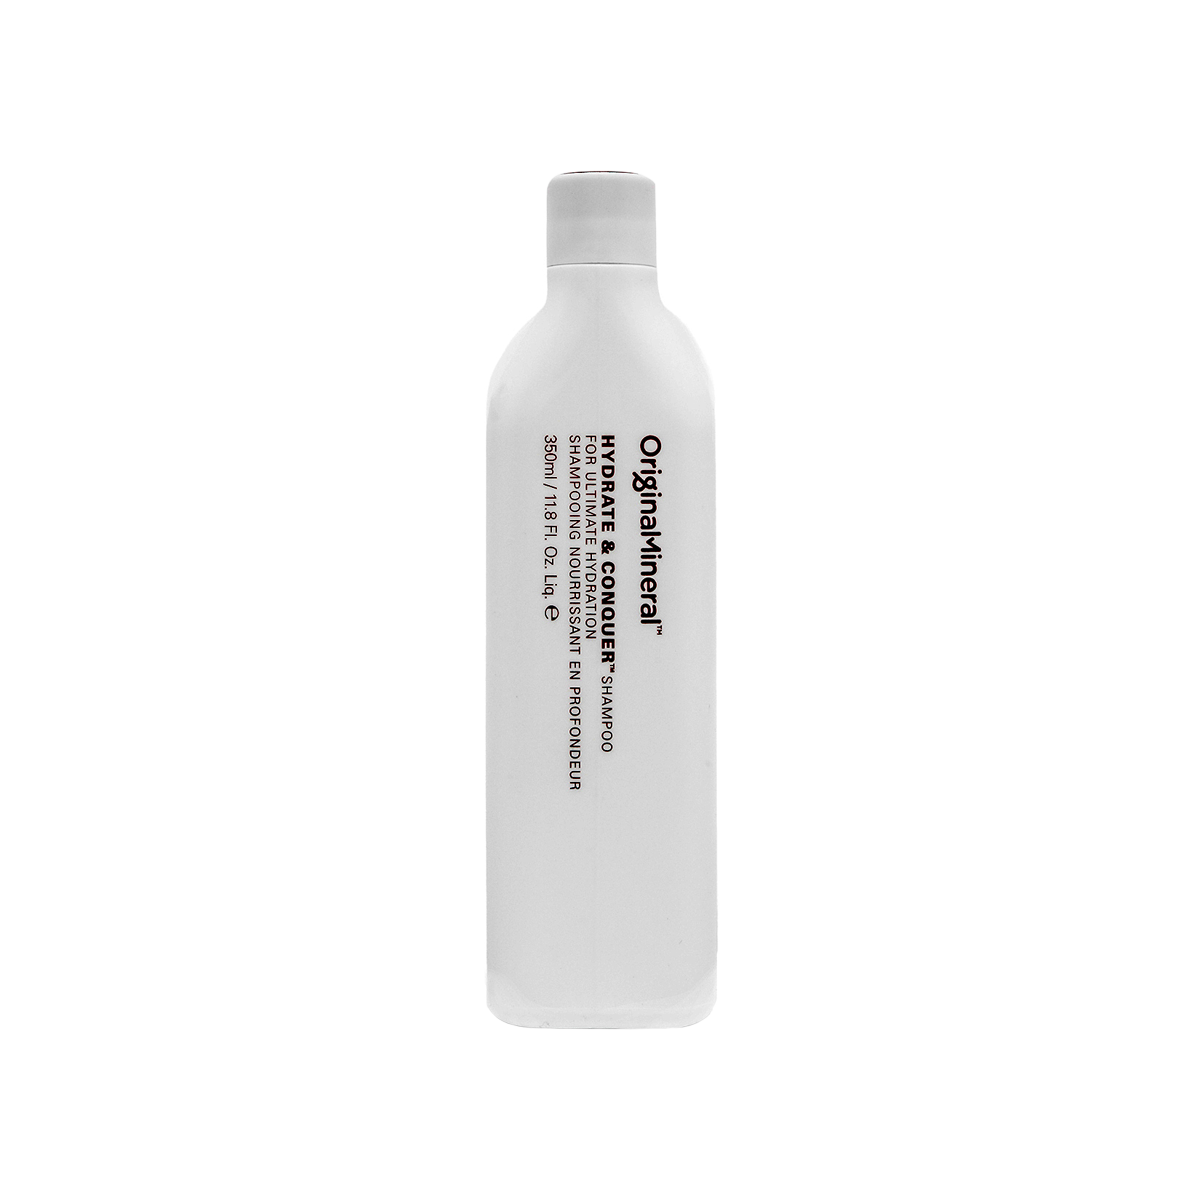 Original & Mineral - Hydrate & Conquer Shampoo